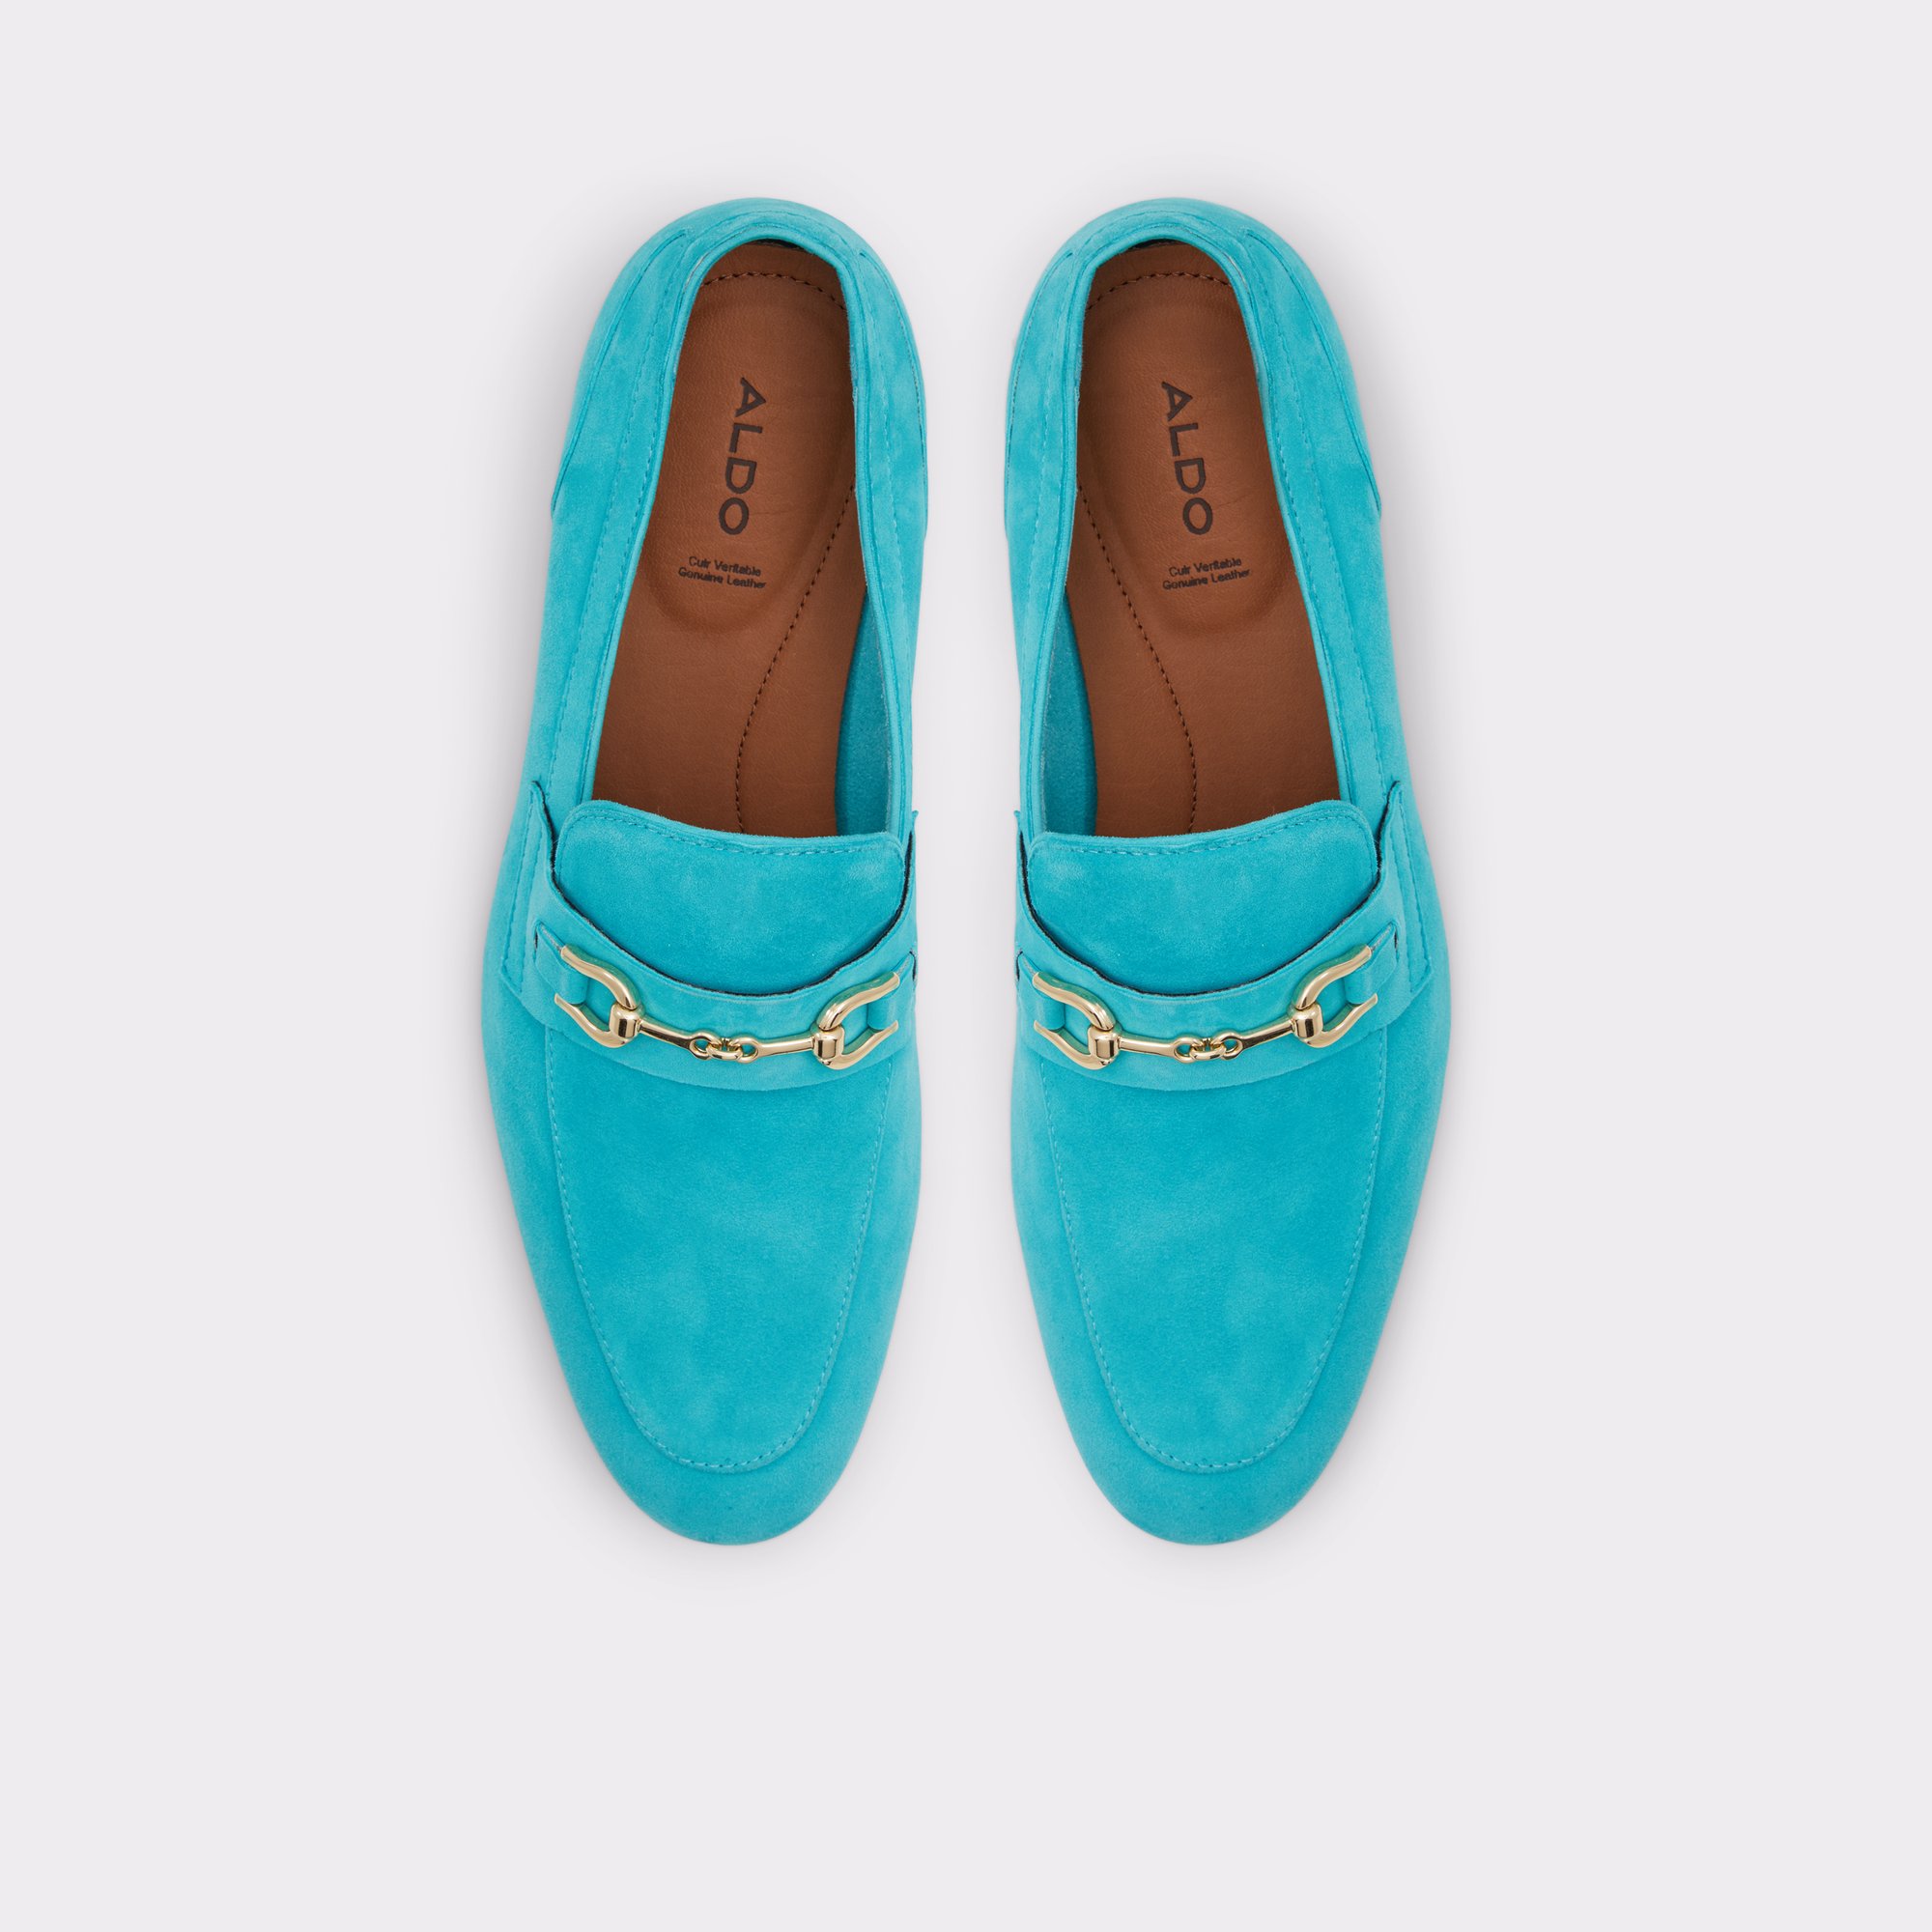 Marinho Turquoise Men's Loafers & Slip-Ons | ALDO Canada